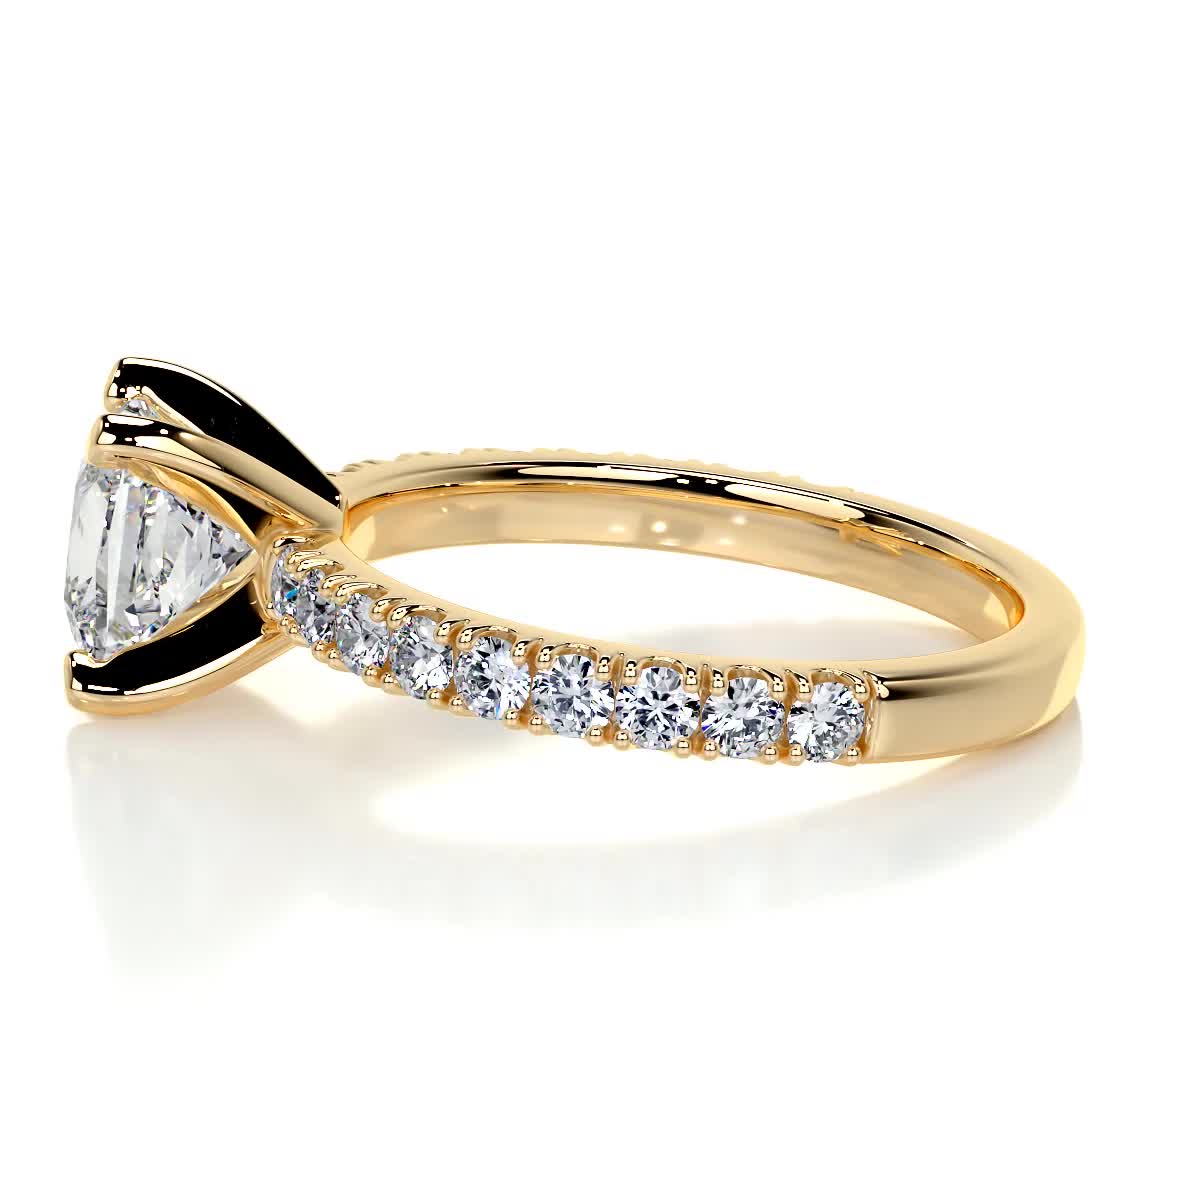 1.07 Carat Princess Cut Pave Moissanite Engagement Ring